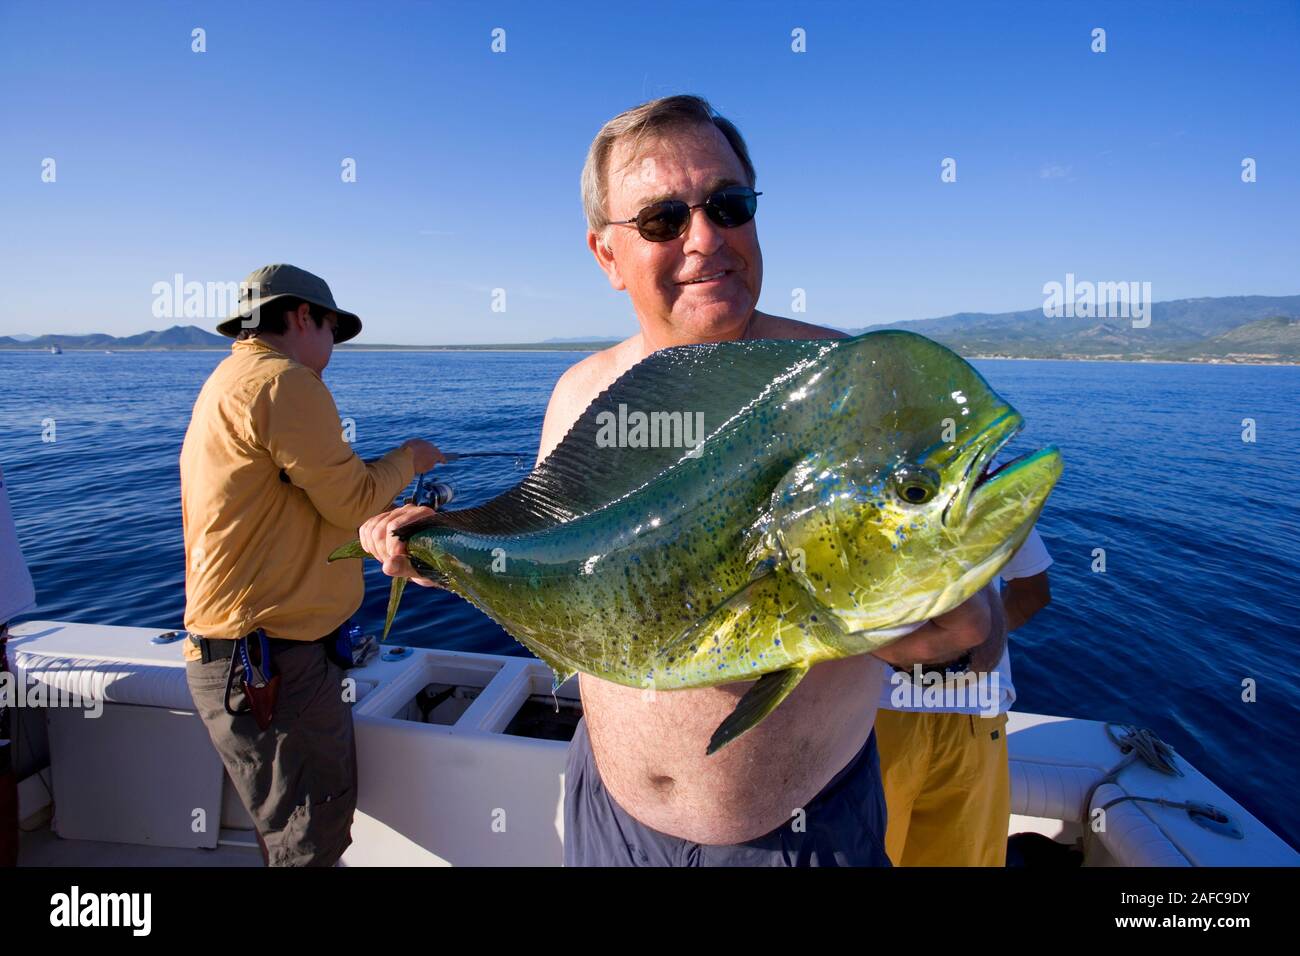 Mann mit frisch gefangenen Mahi Mahi Fisch in Baja, Mexico Model Released Foto Stockfoto